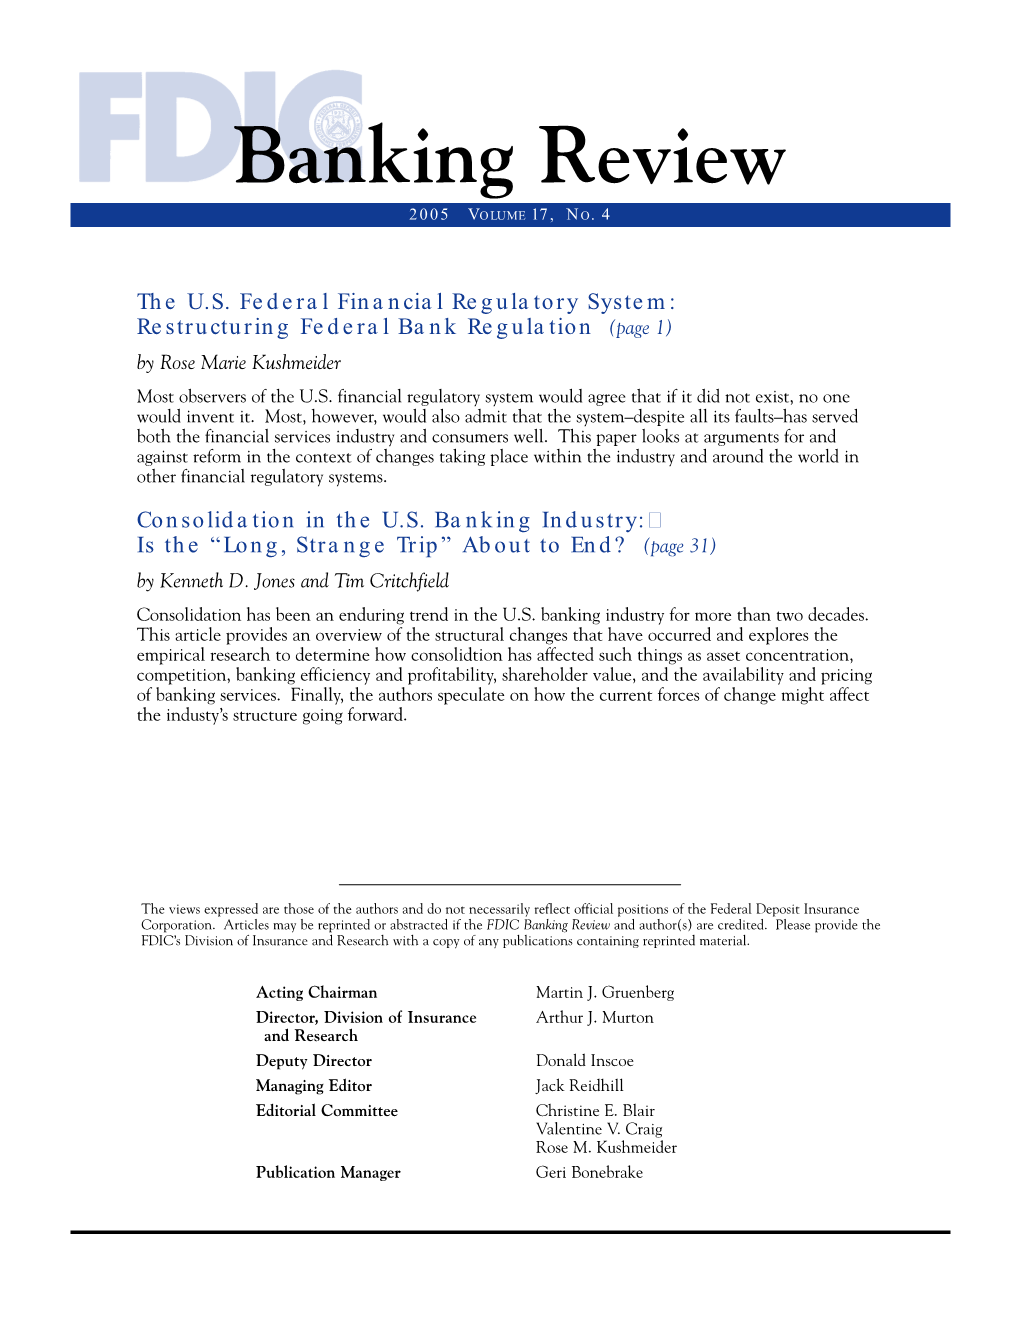 FDIC Banking Review, Vol. 17, No. 4